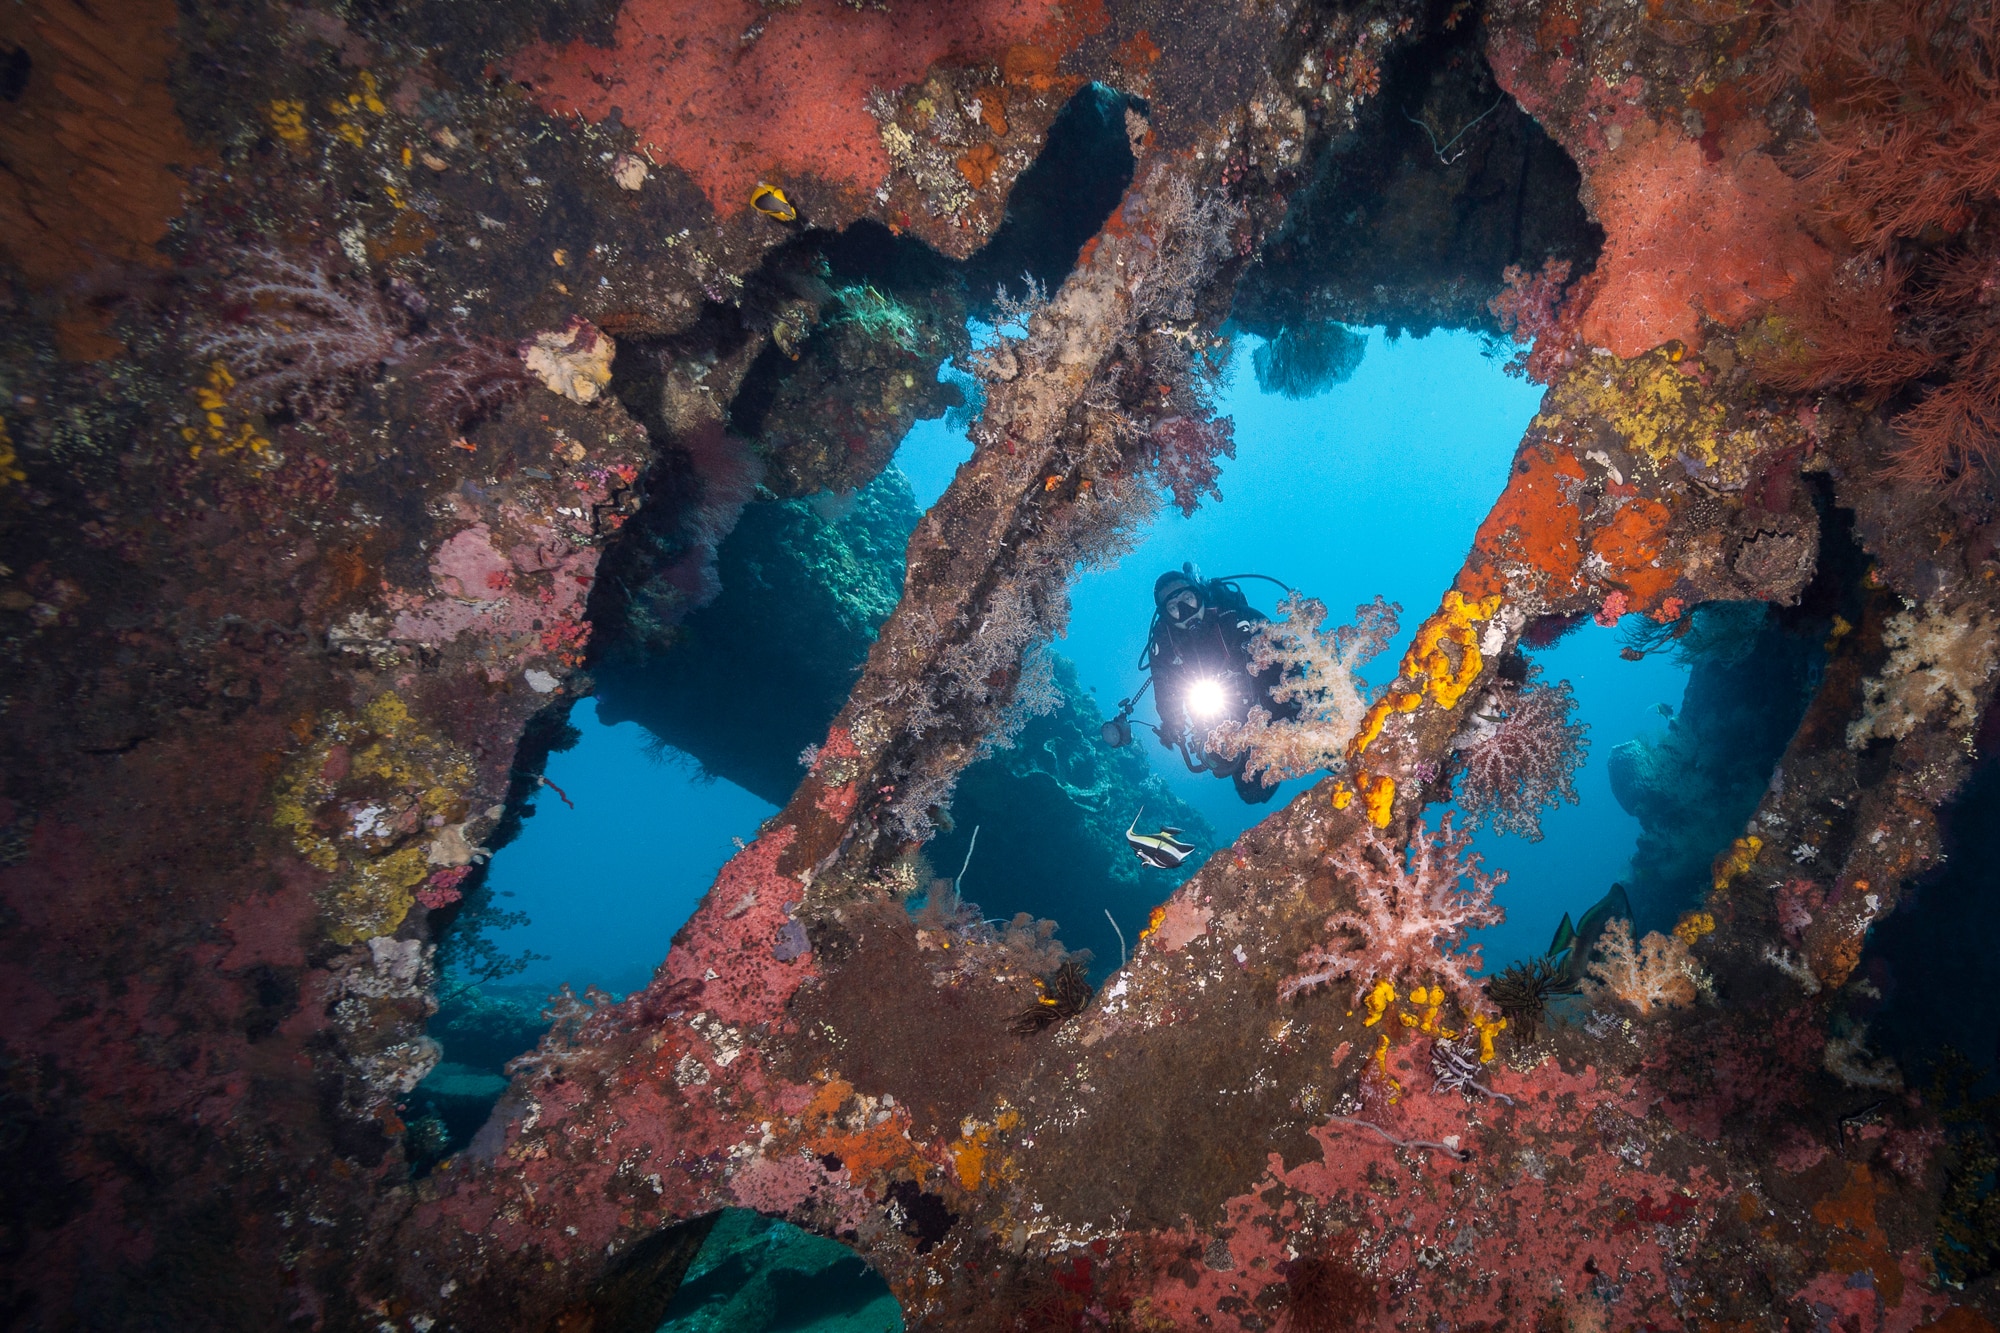 USAT Liberty Wreck Diving in Bali